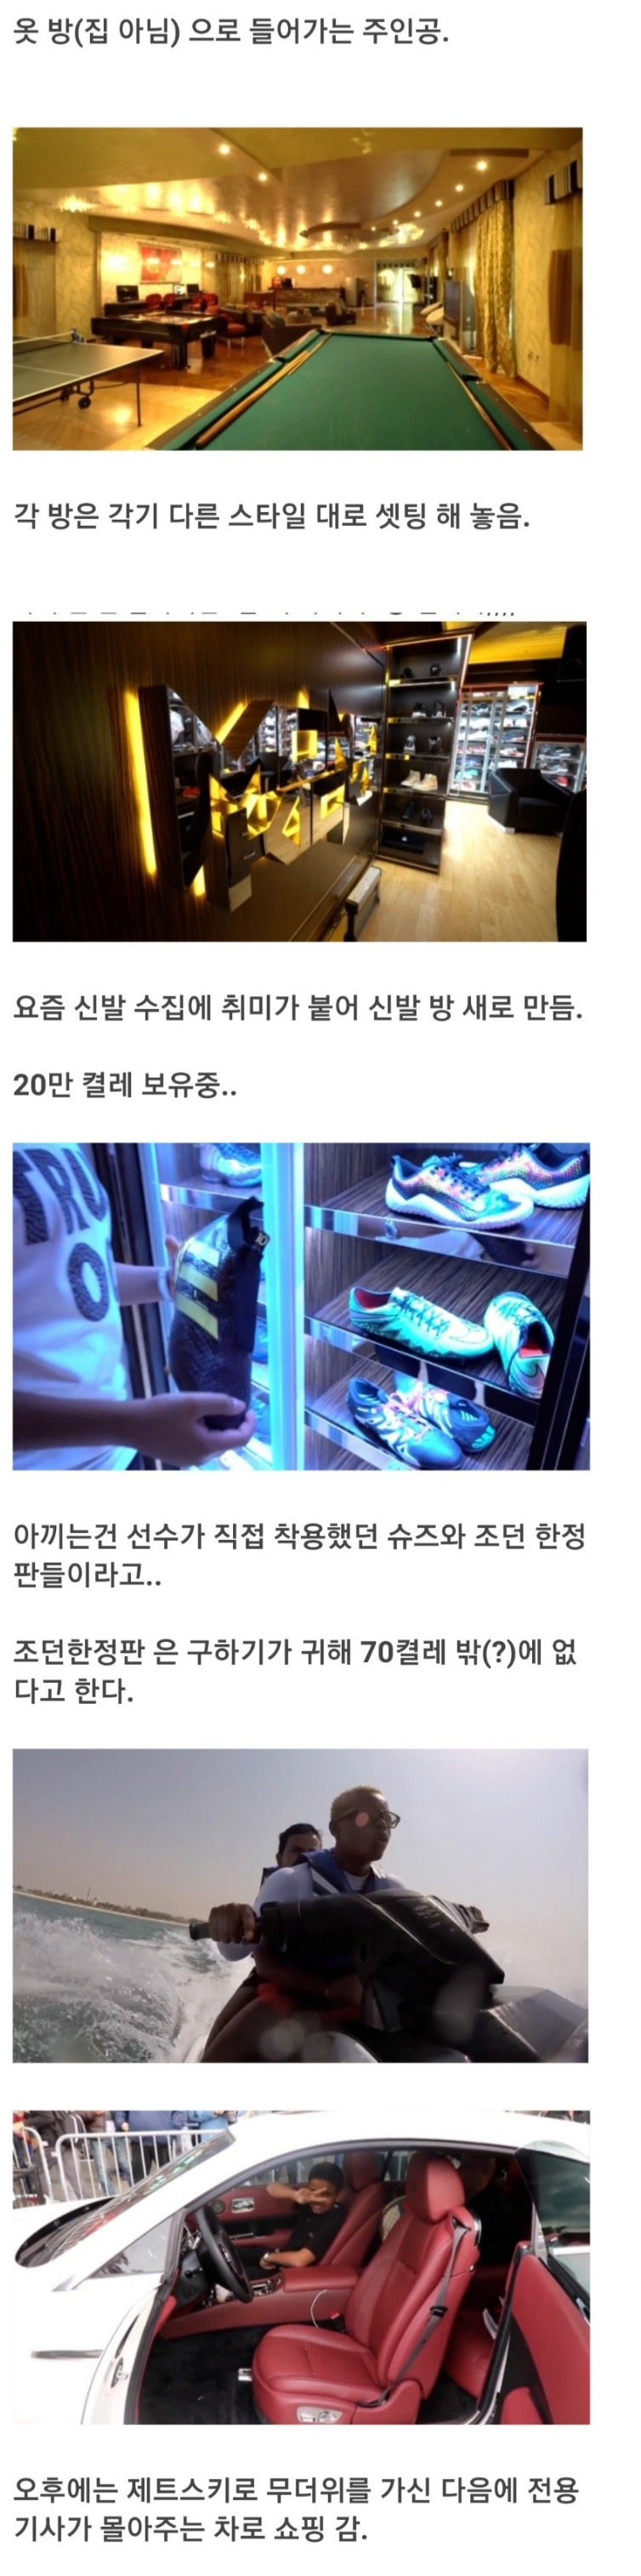 Screenshot_2019-12-05 자유게시판 - 두바이 15세 소년의 하루 일과(1).jpg